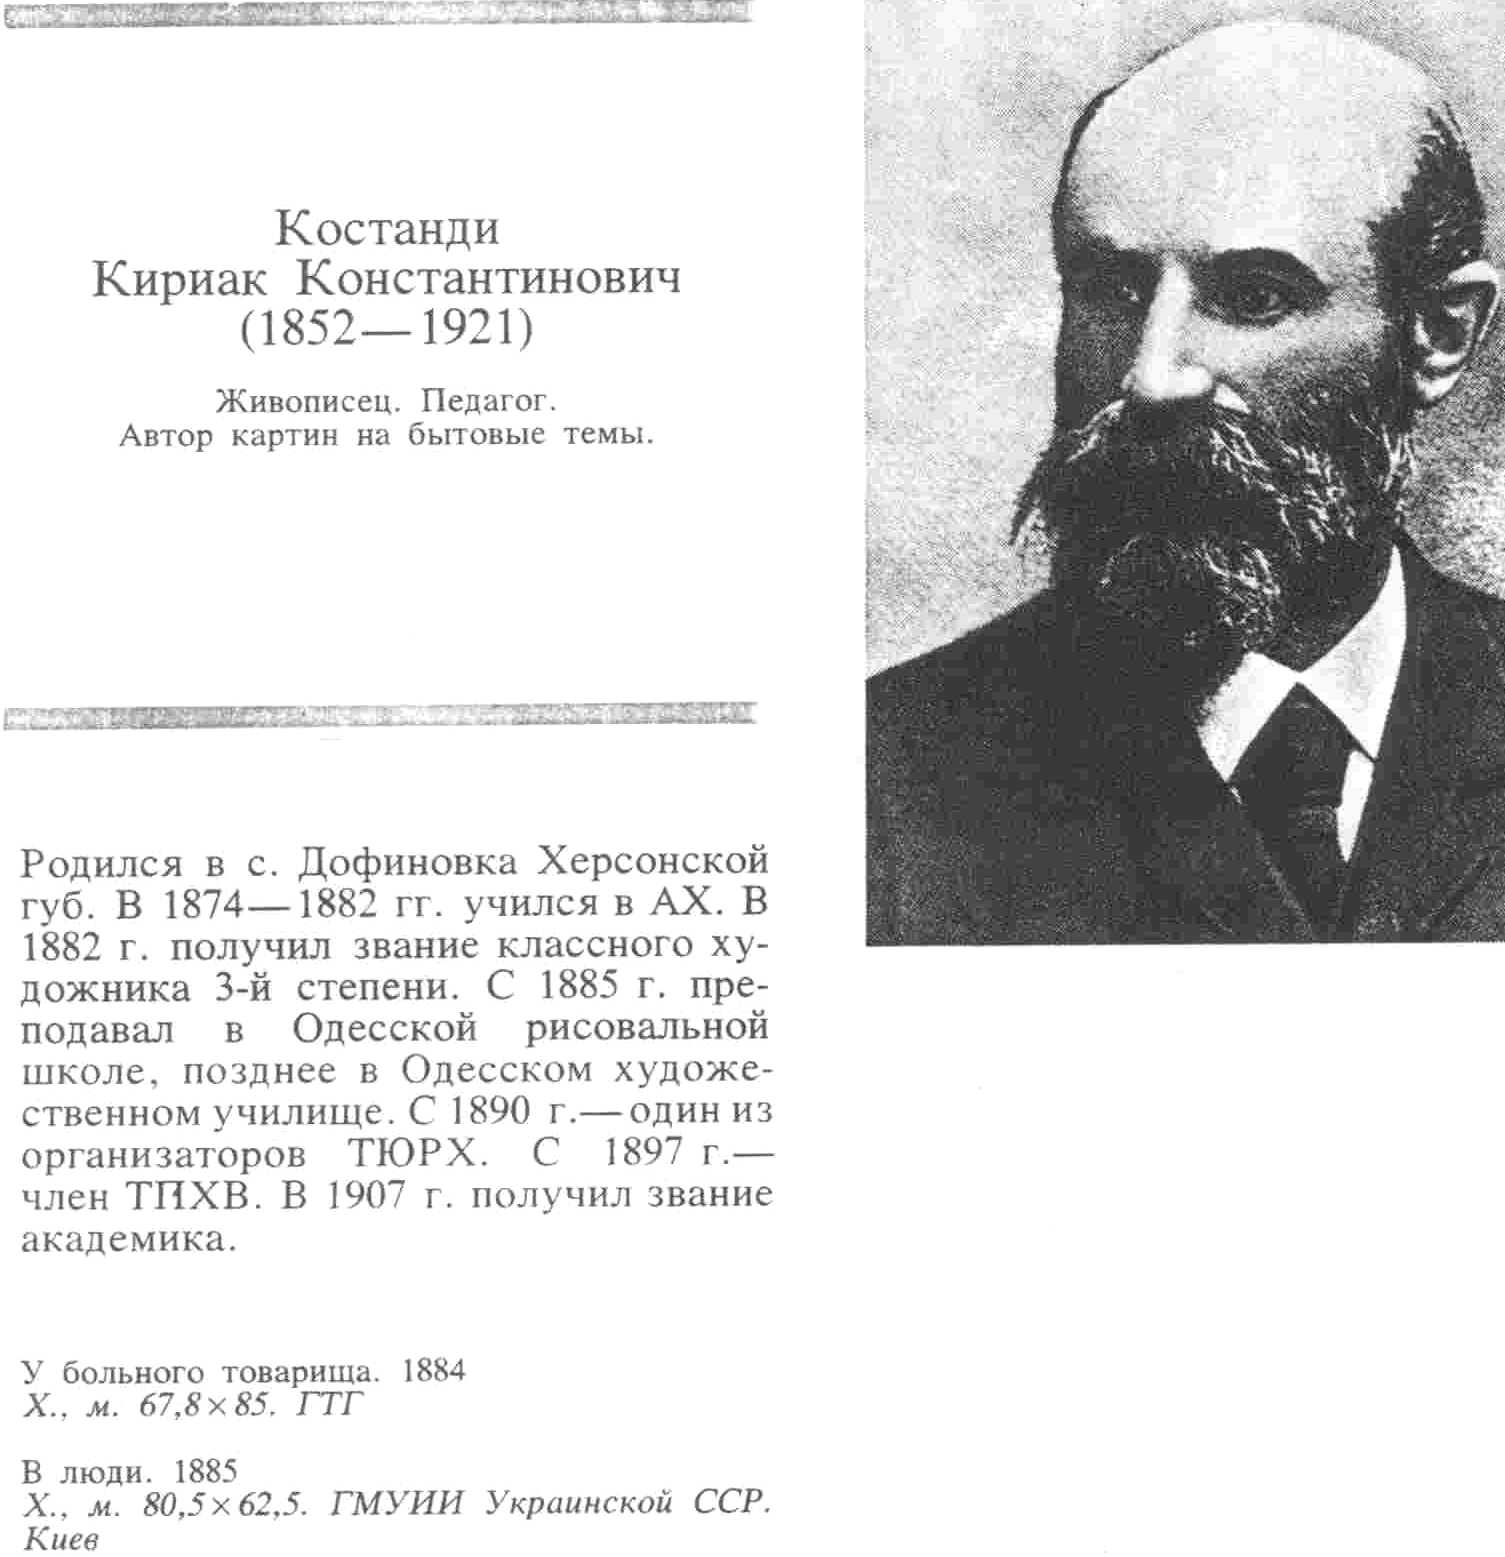 Entry for the painter, Kiriak Konstaninovich Kostandi.